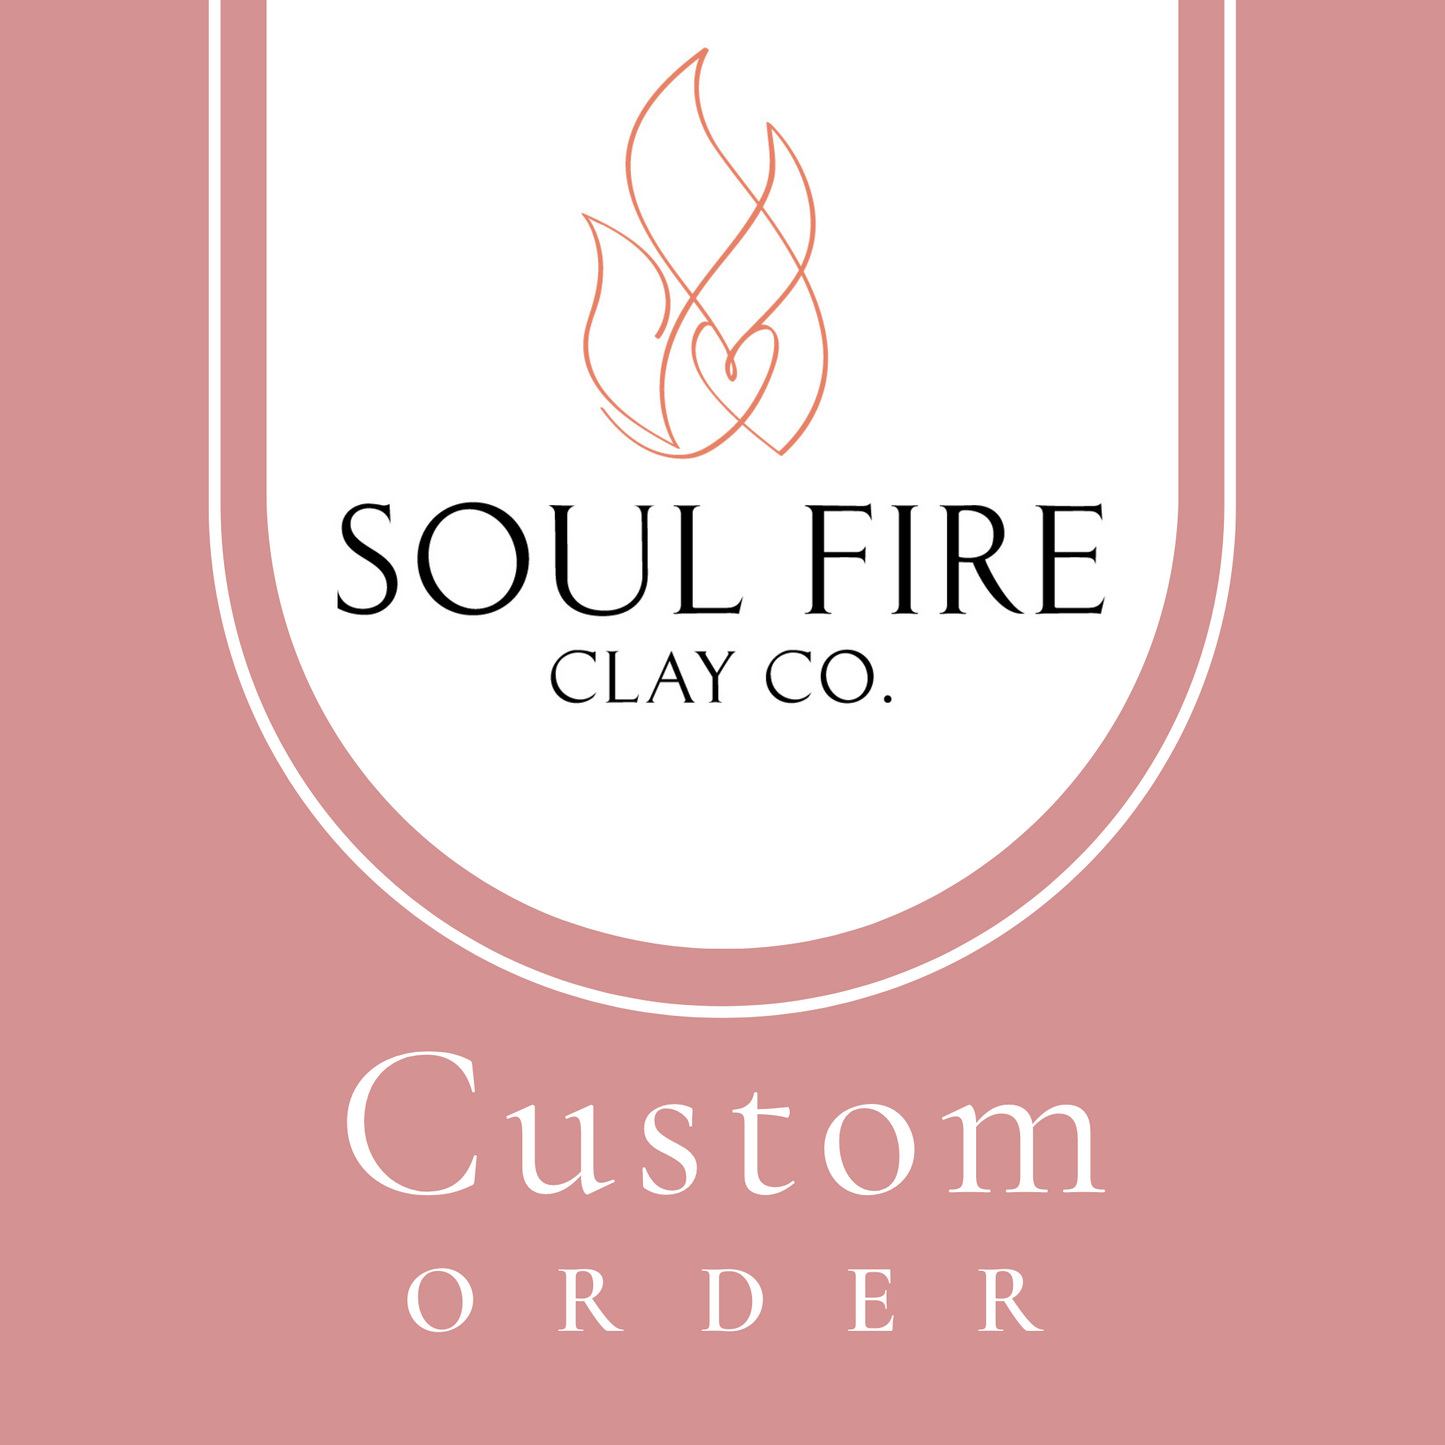 Custom Order - Chandra